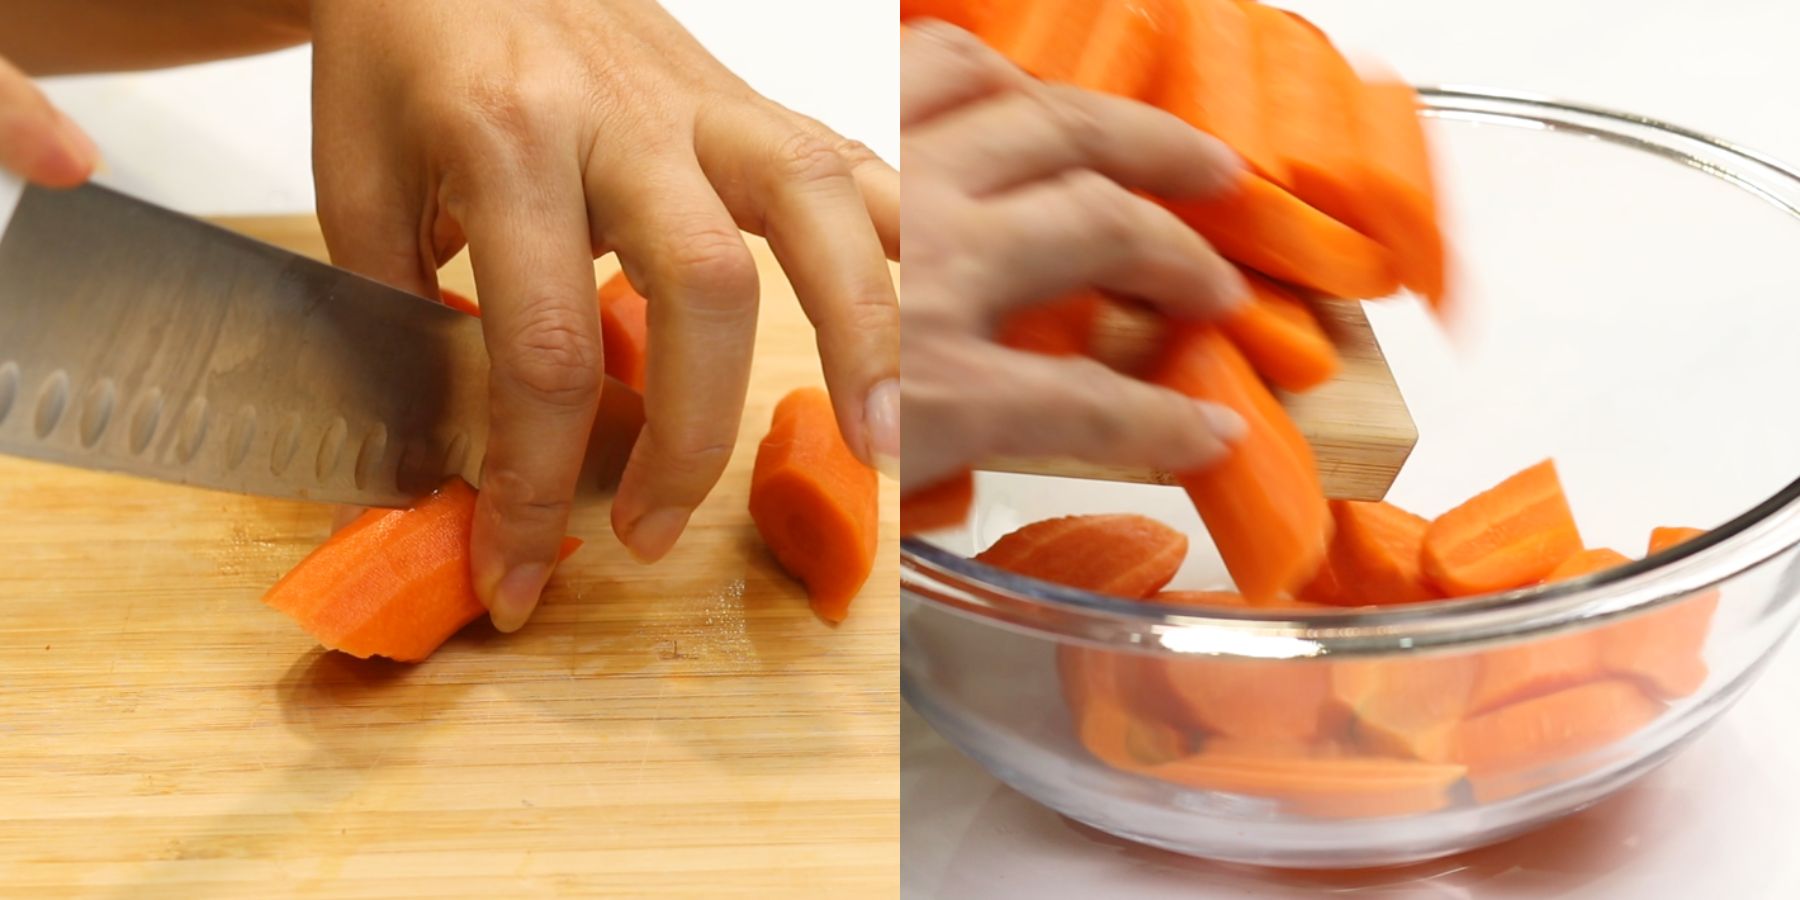 Roasted carrot process shots.